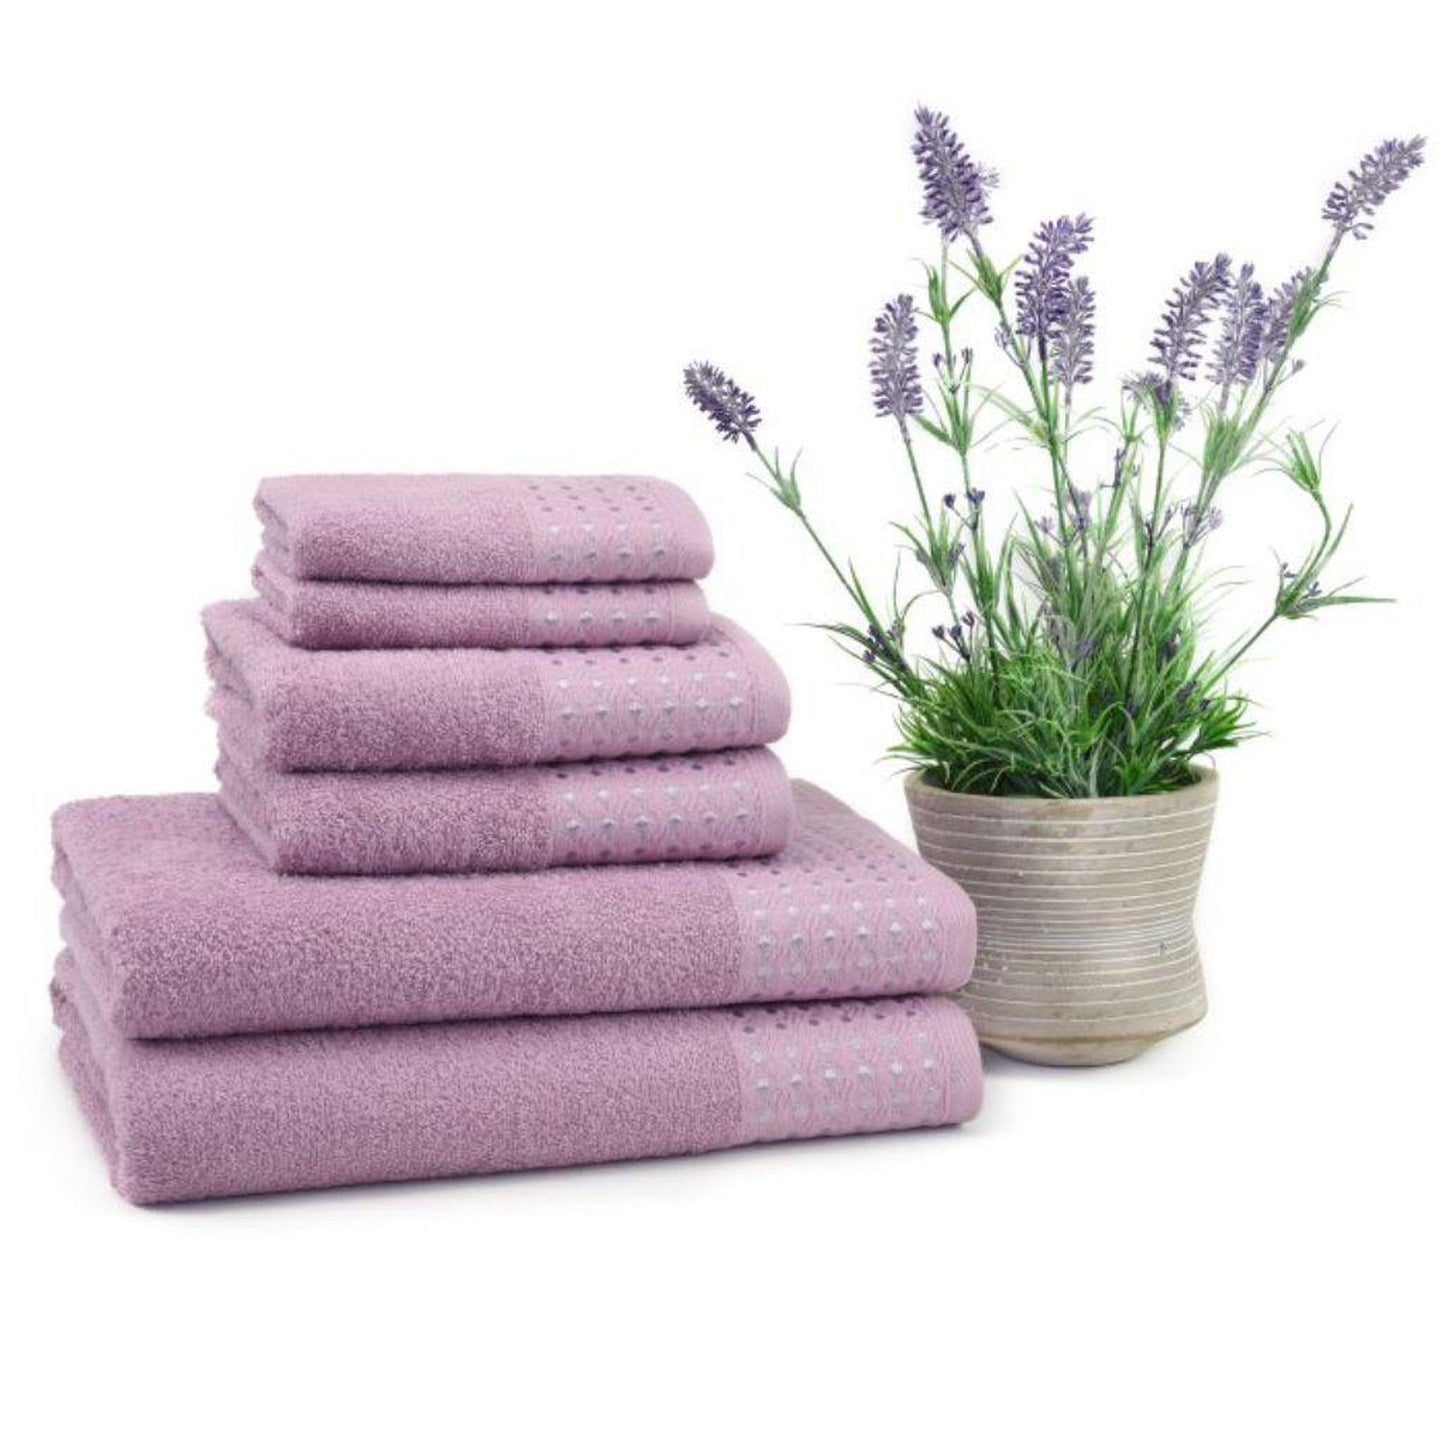 East`N Blue Petek Turkish Cotton Lilac Bath Towel